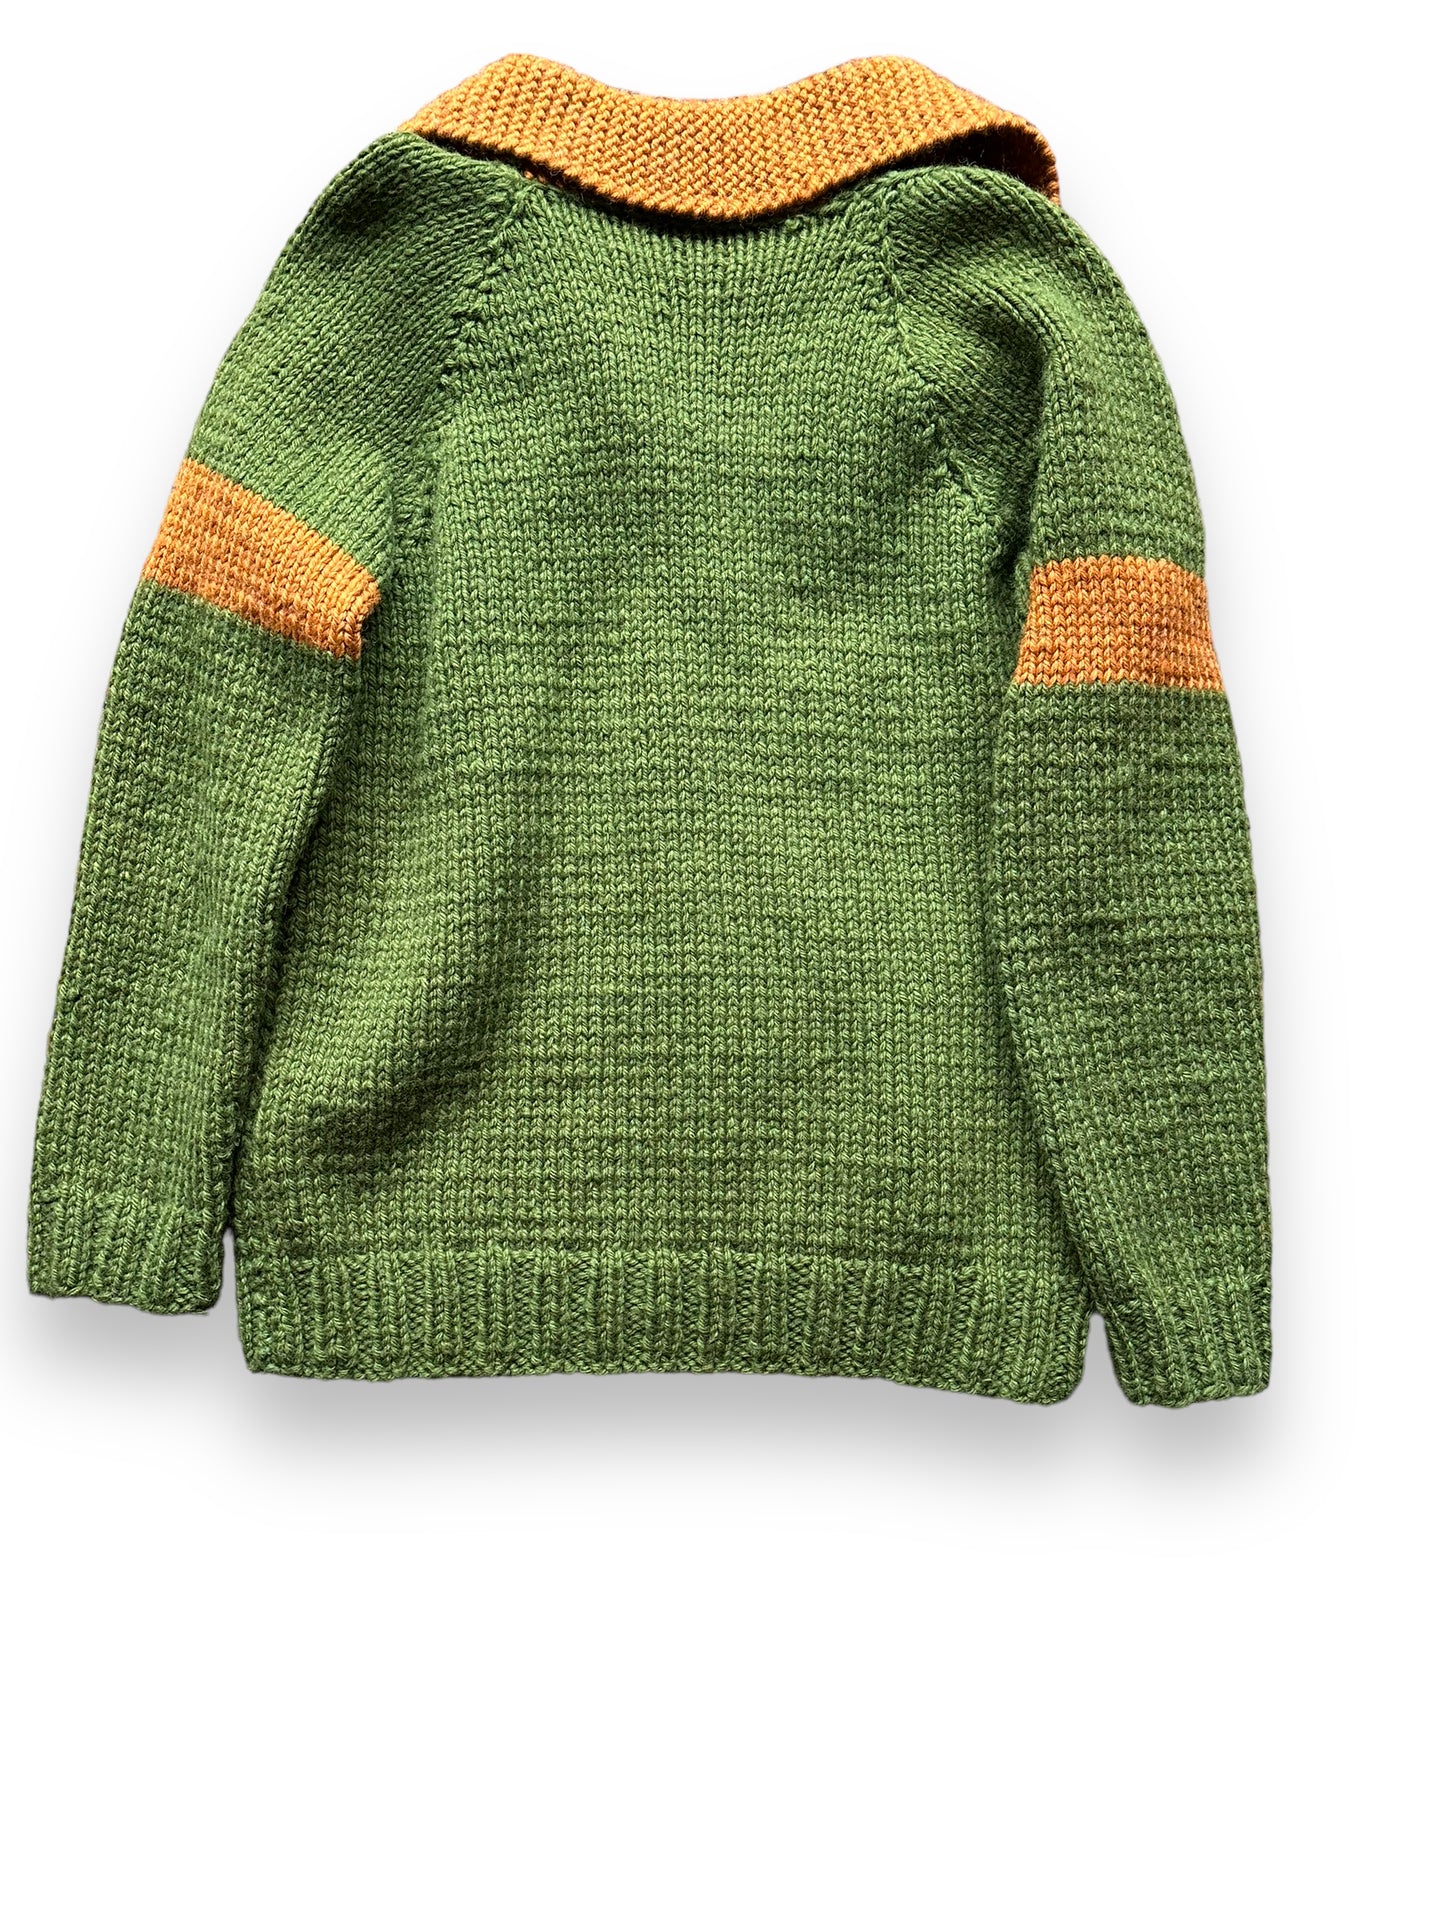 Rear Detail of Vintage Green and Brown Striped Handknit Sweater SZ L | Vintage Wool Sweaters Seattle | Barn Owl Vintage Seattle